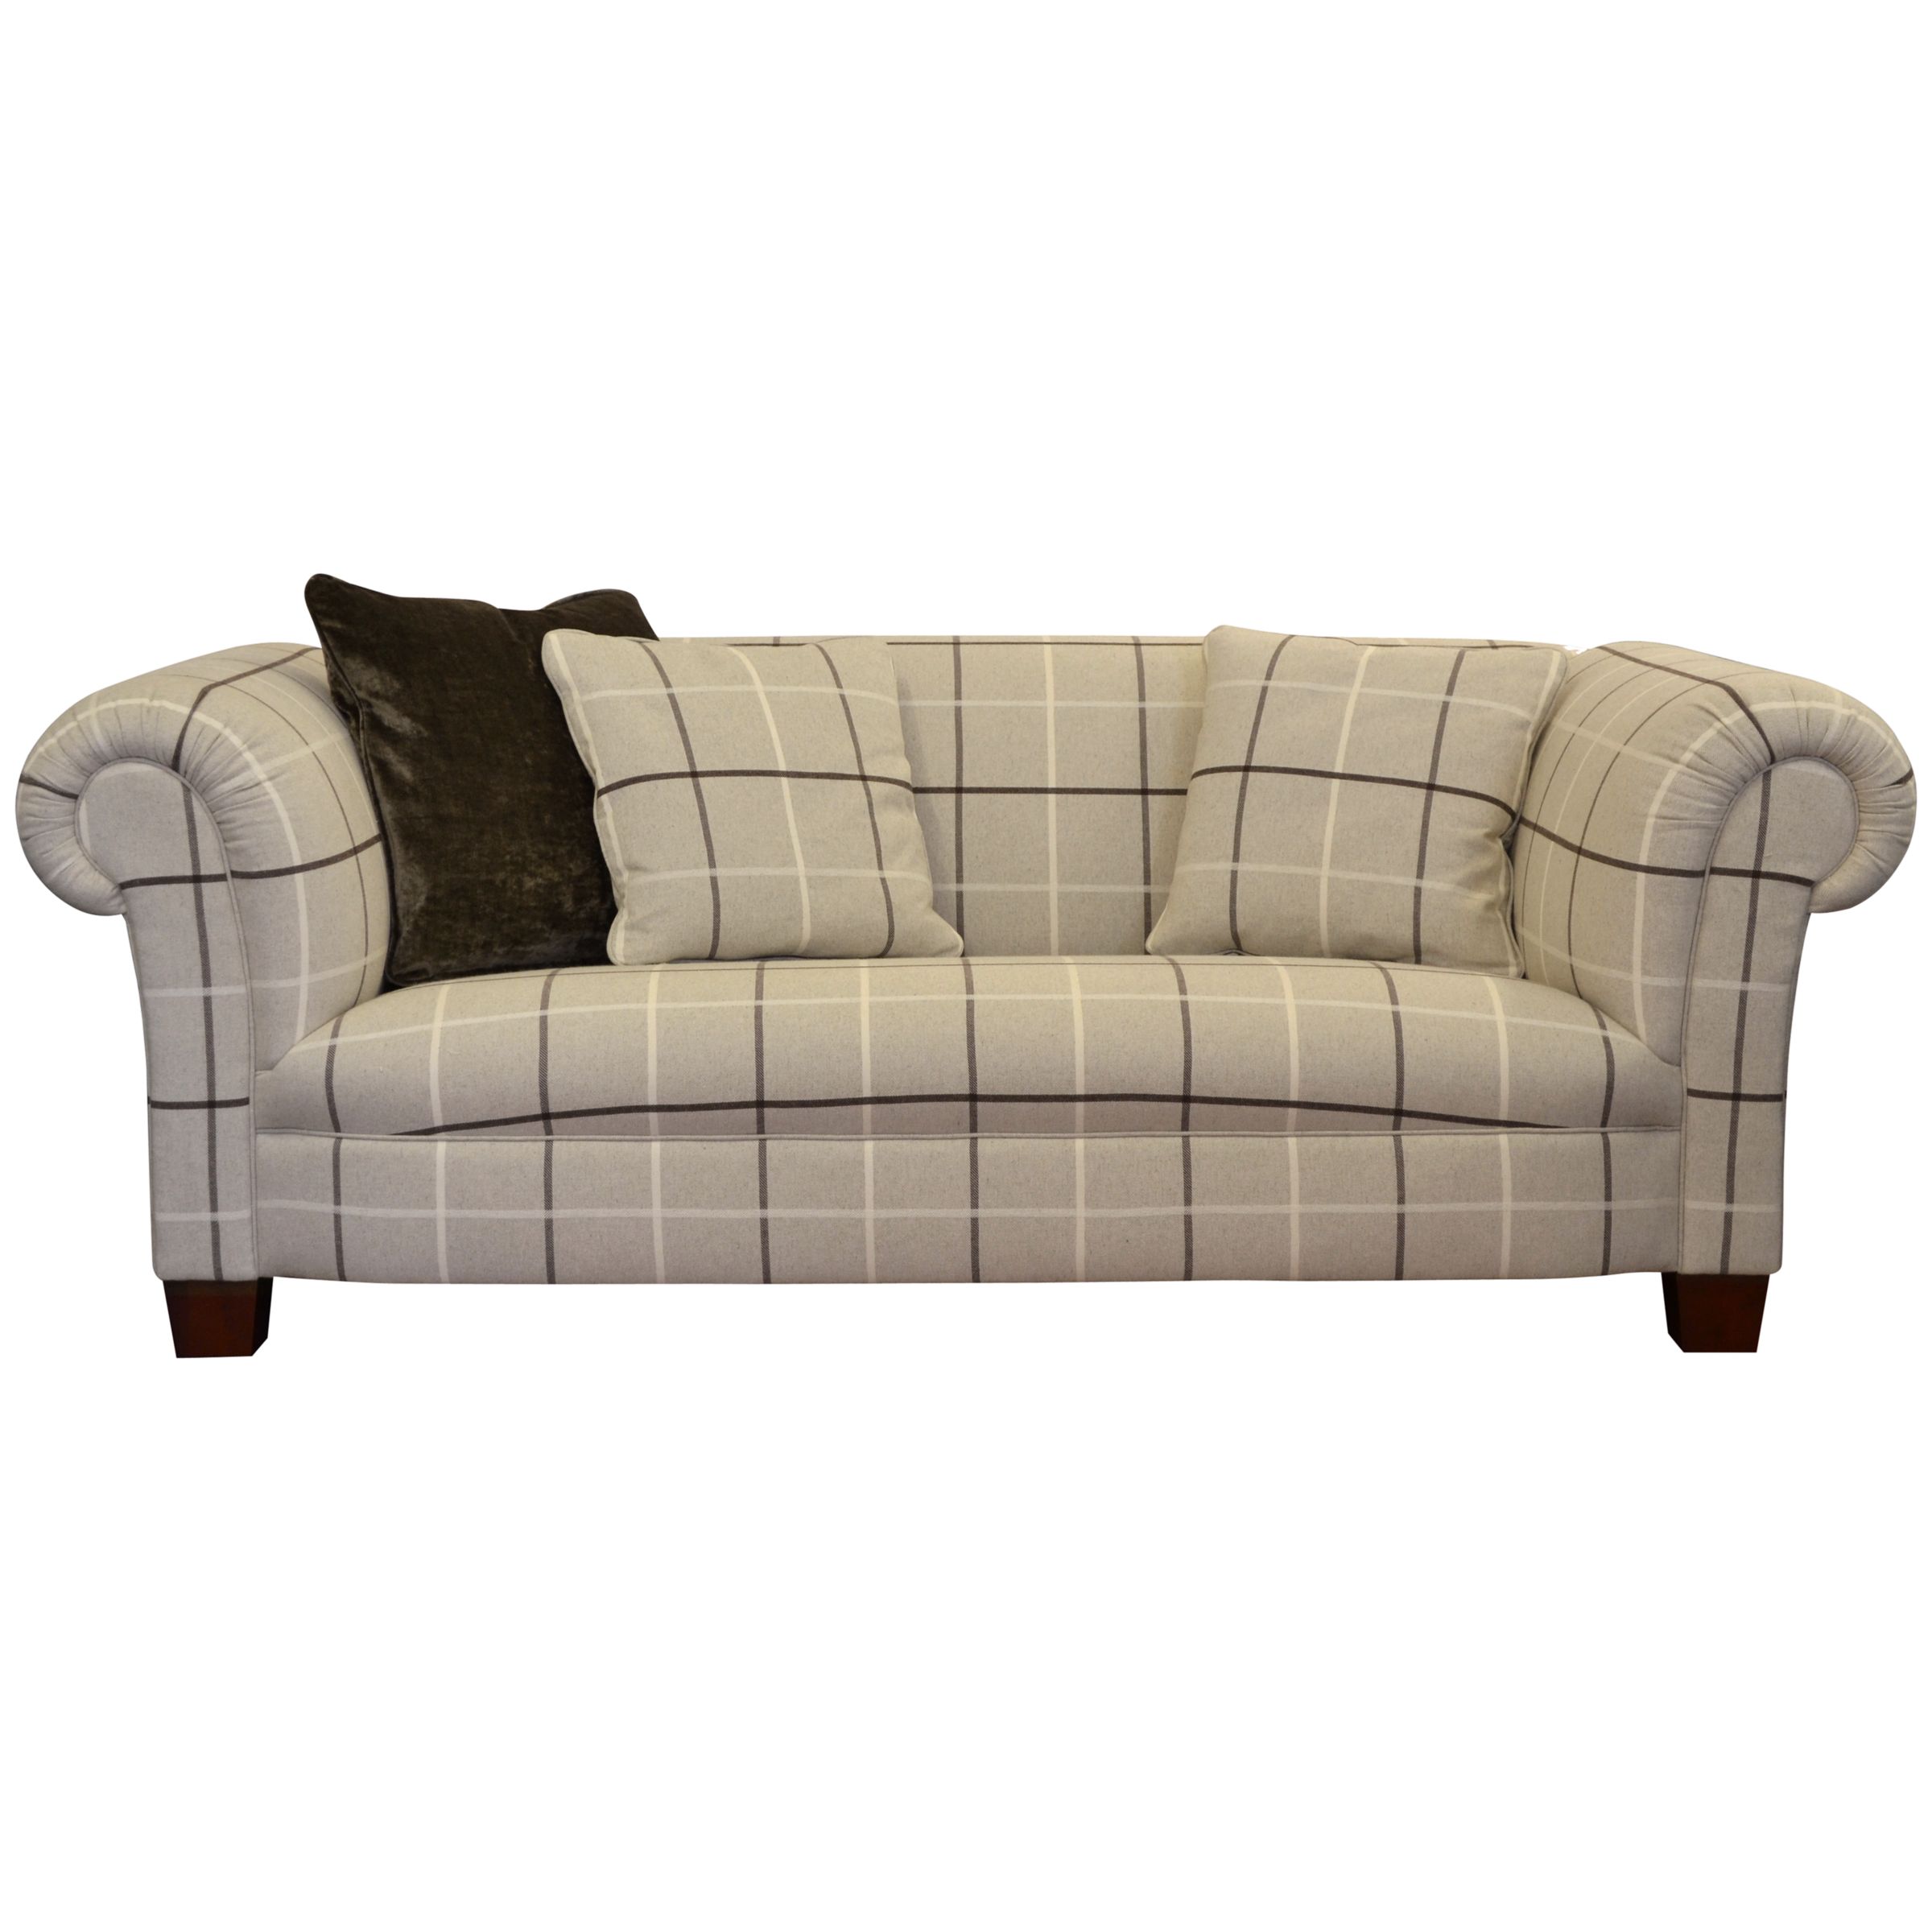 John Lewis Todd Large Sofa, Holywell Check, width 192cm